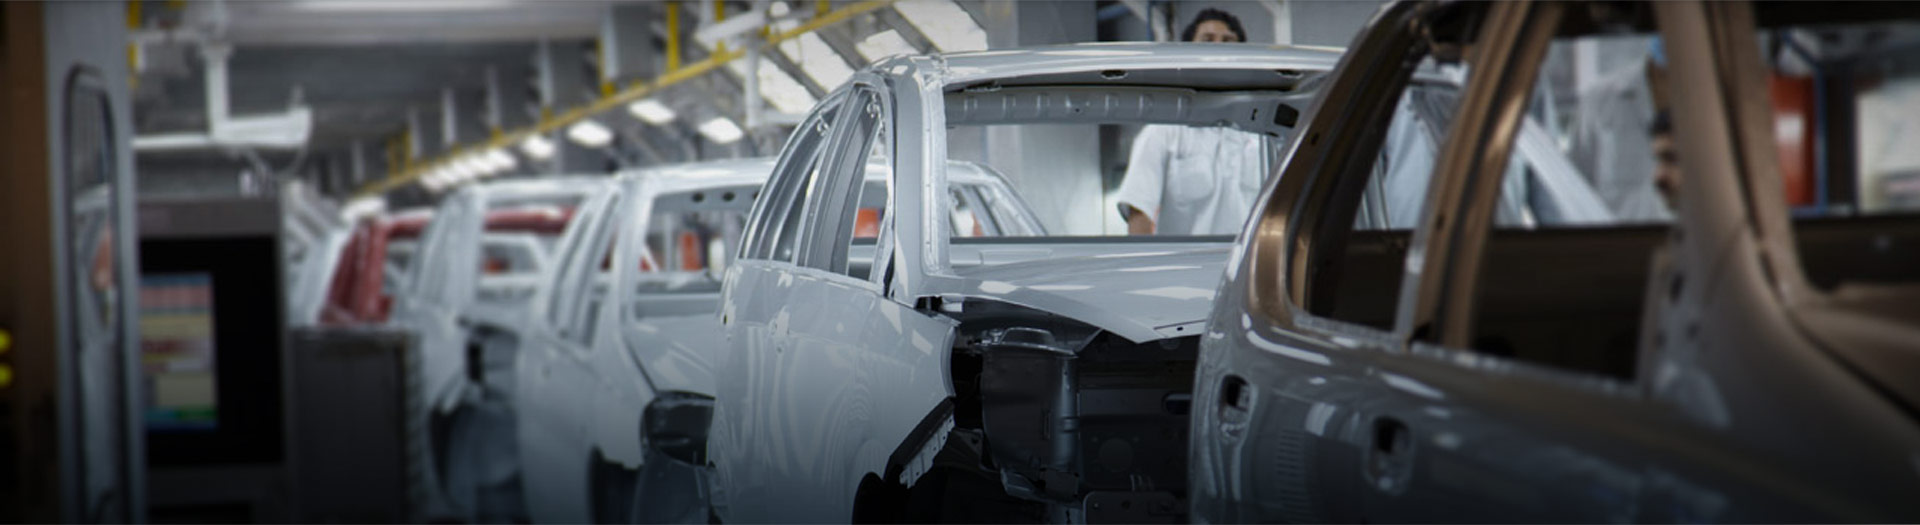 Tata Motors car manufacturing plant in India